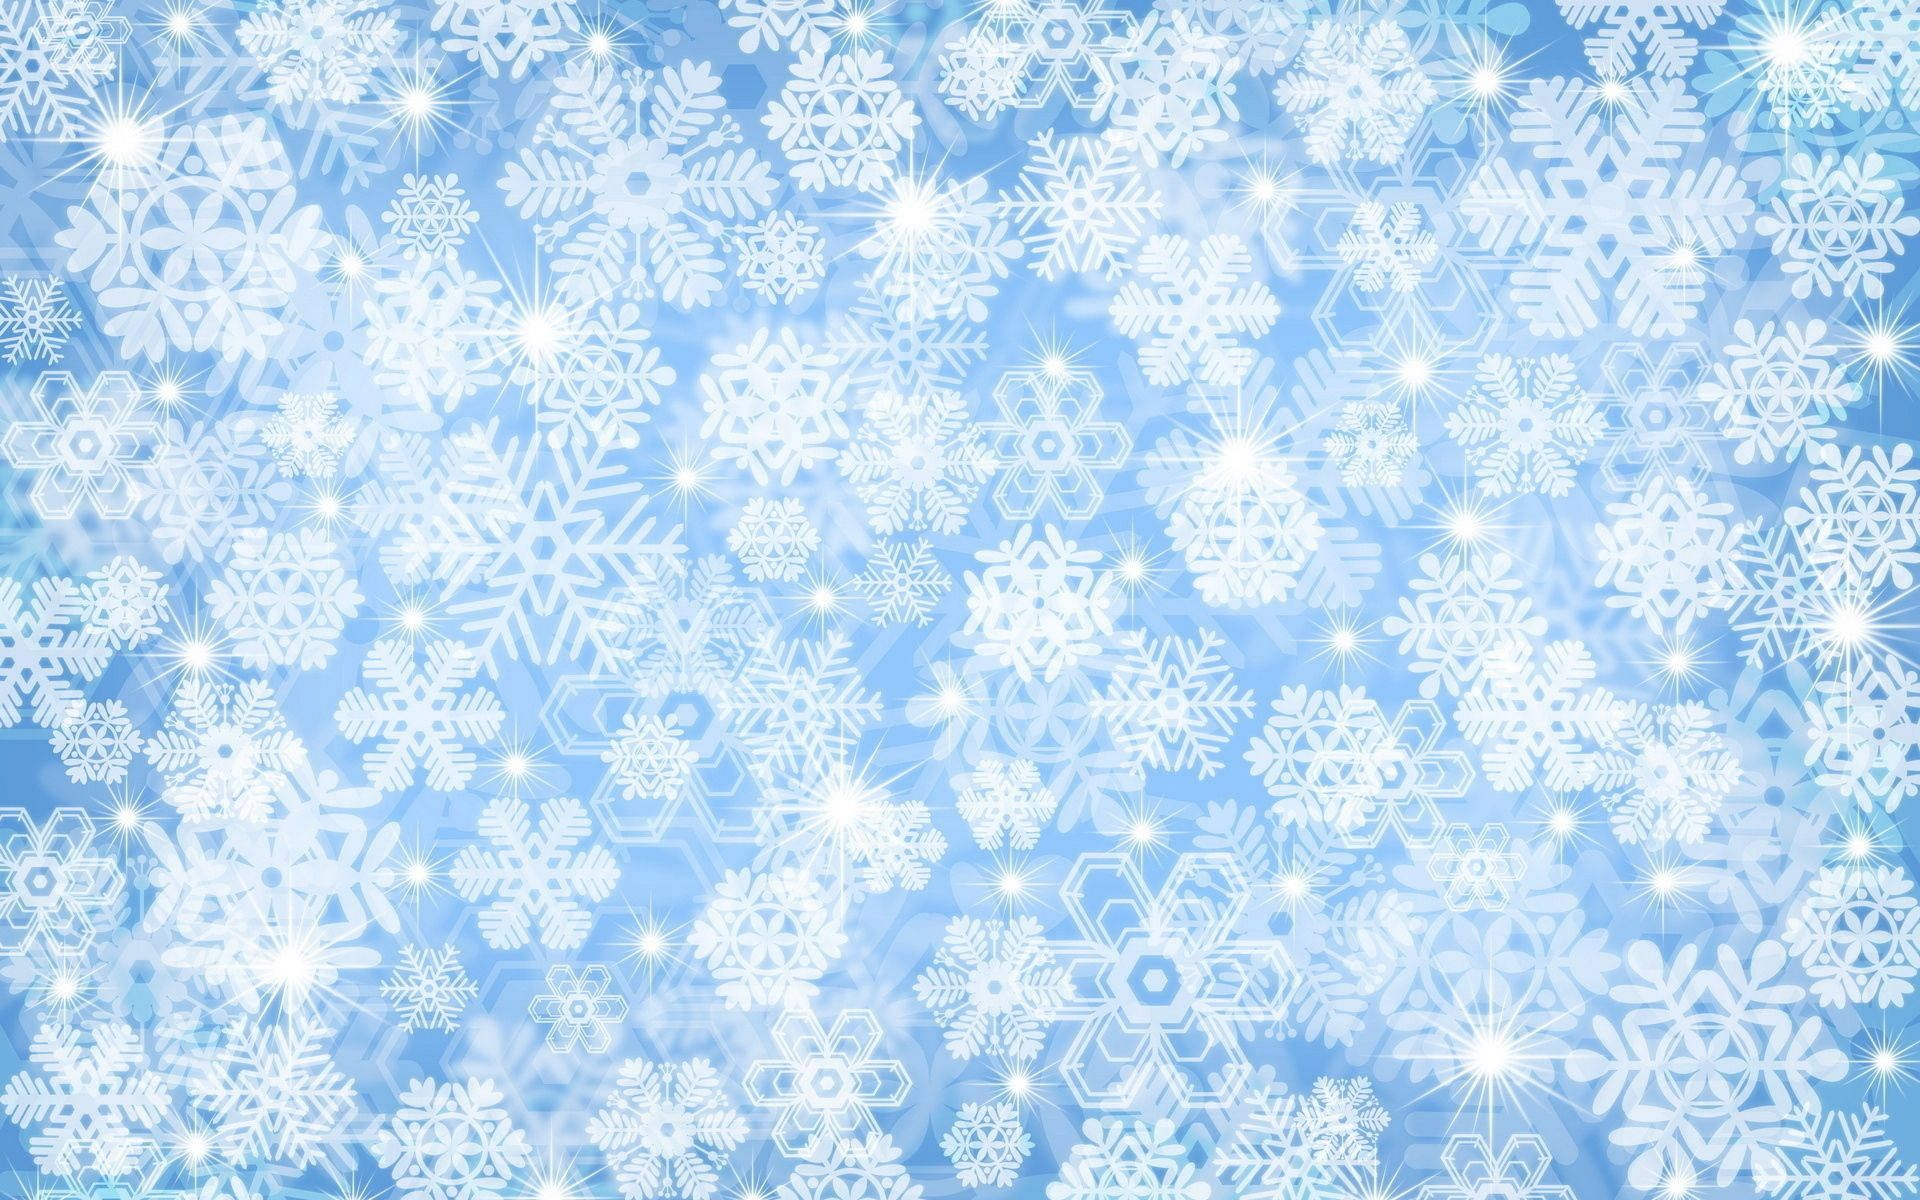 Snowflake Wallpaper Full HD, 4K Free to Use